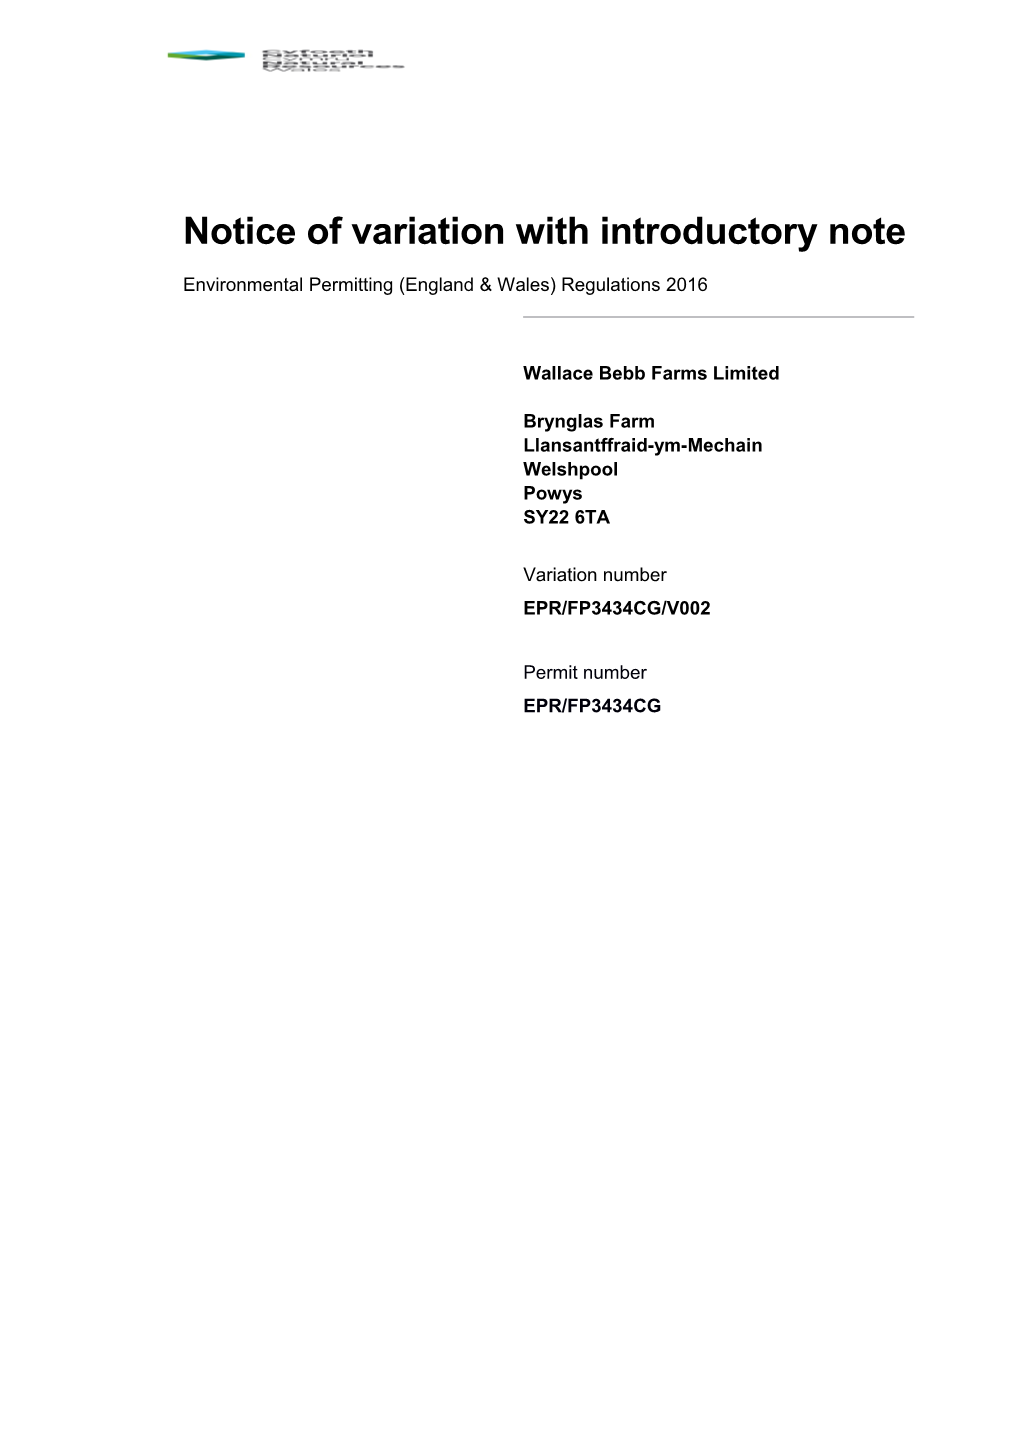 233 08 SD30 Environmental Permitting: Variation Notice, No Consolidation